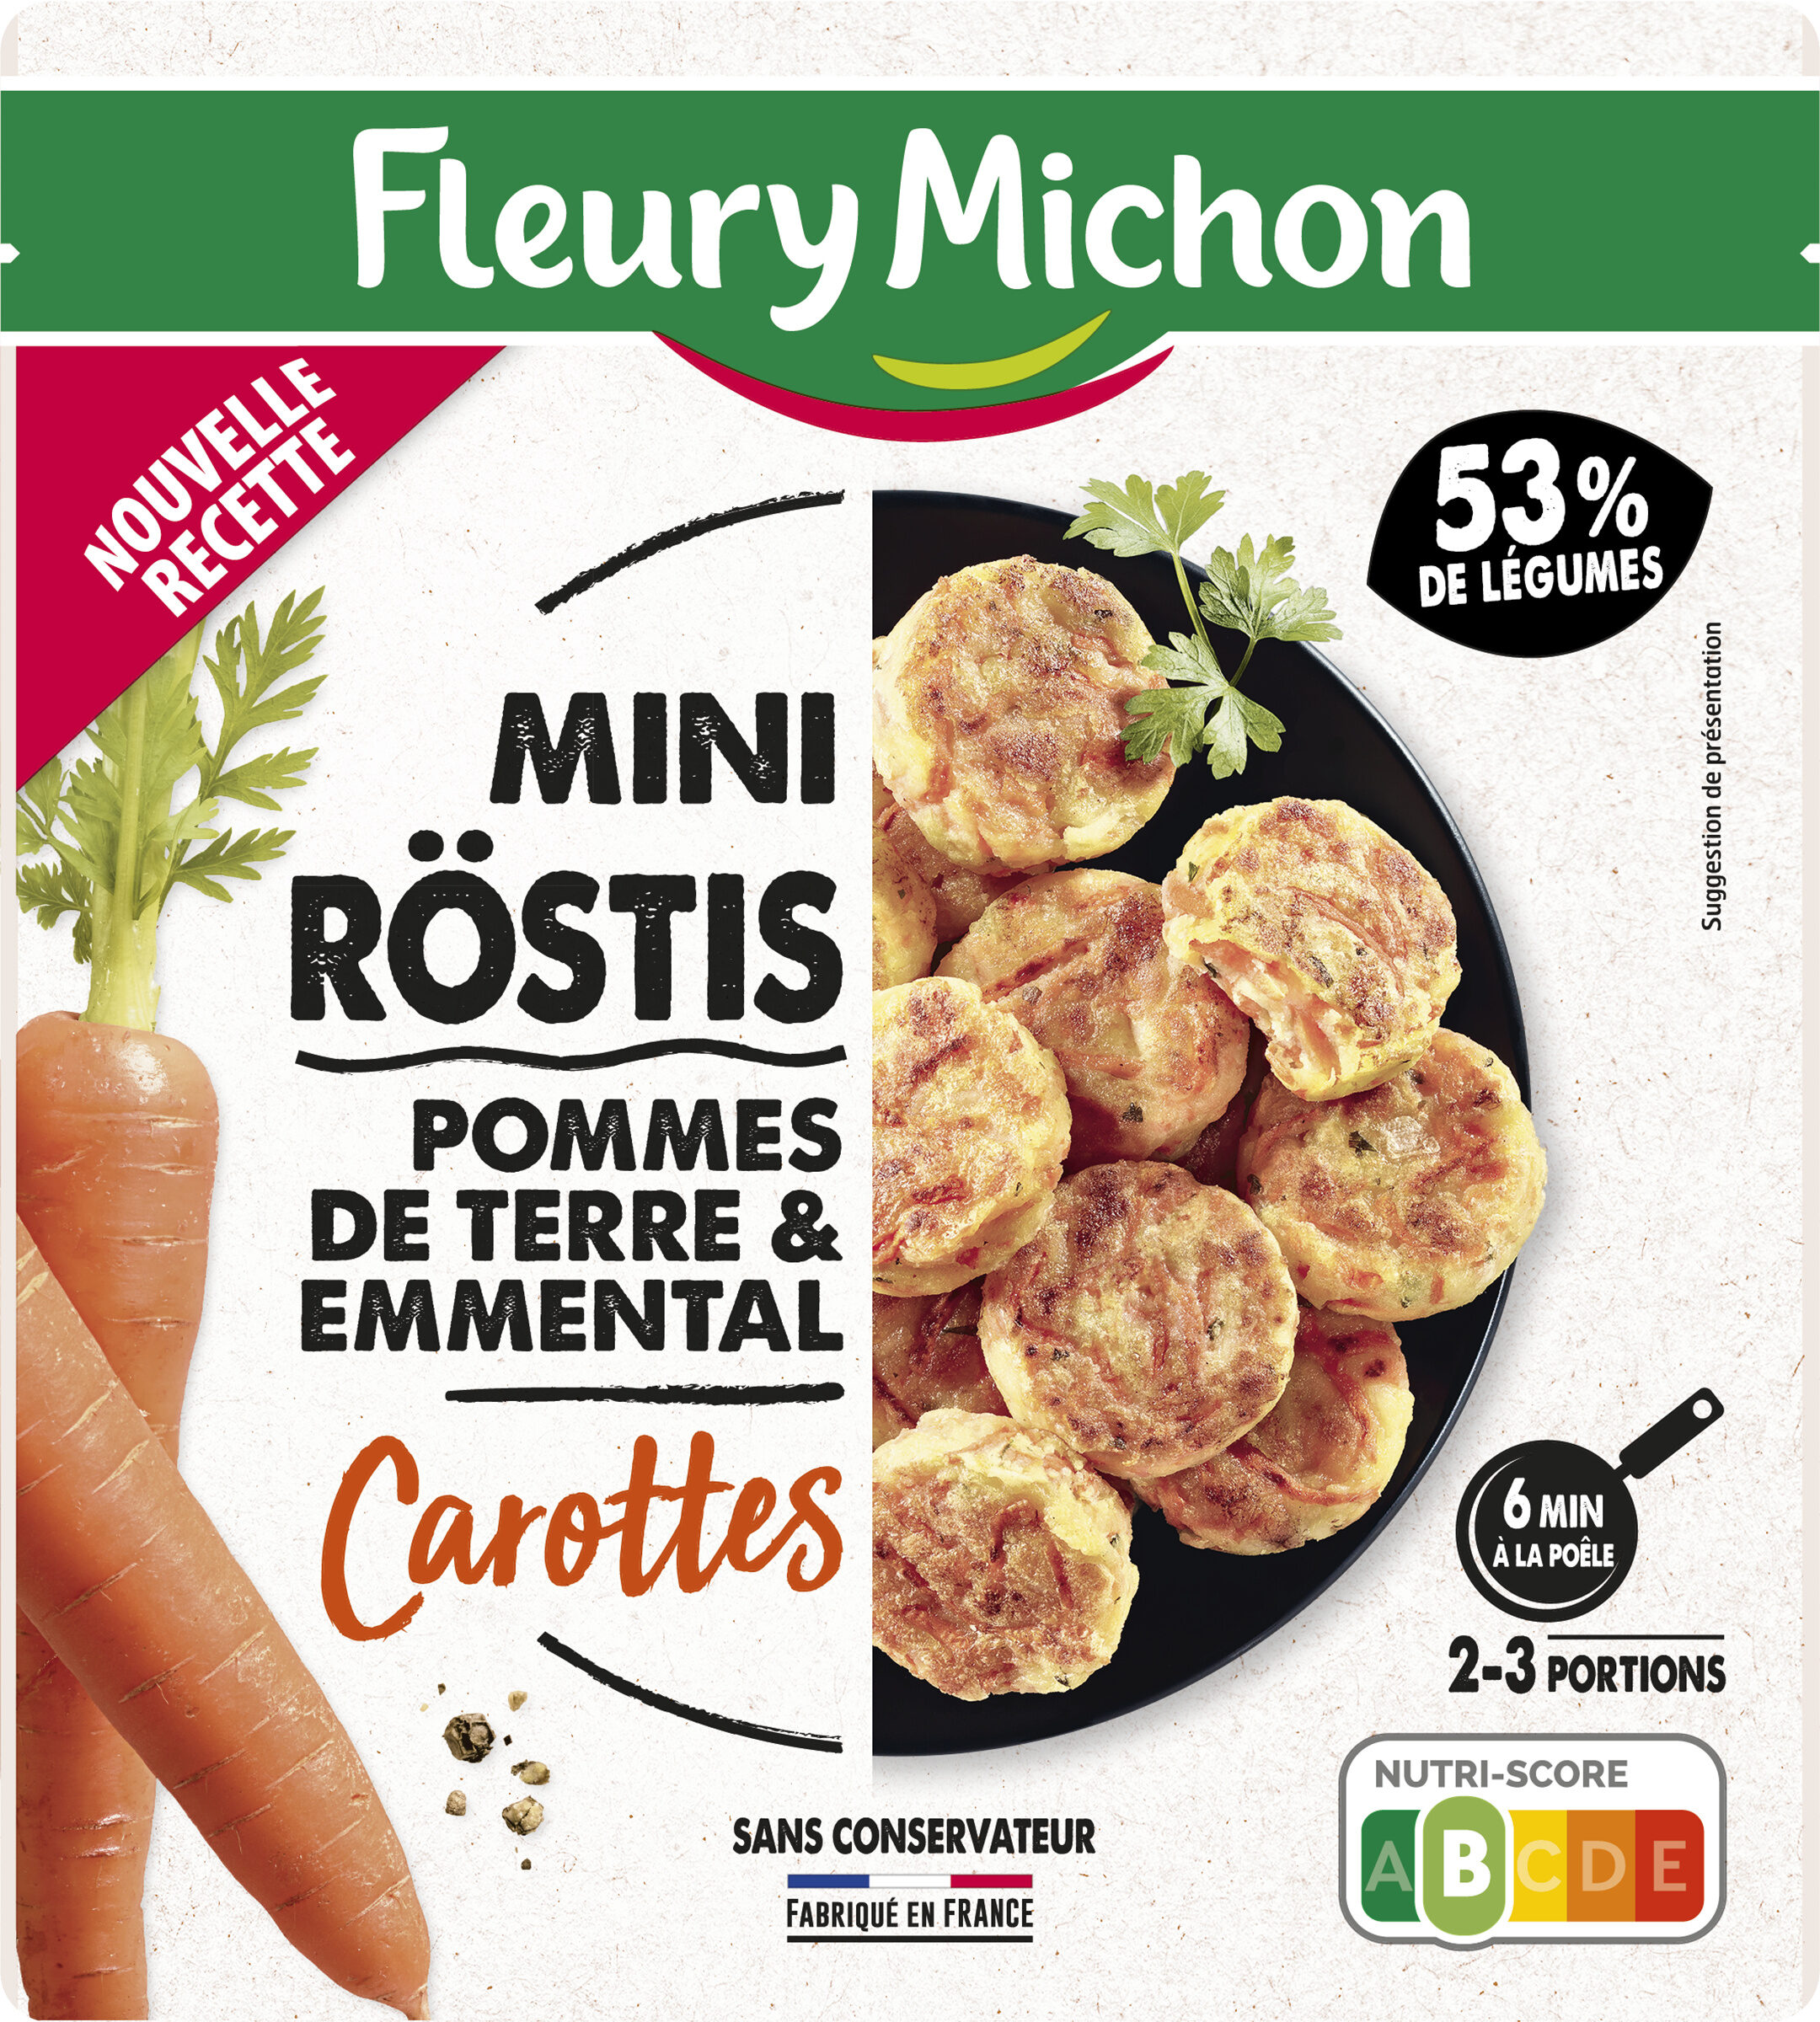 Mini-Röstis pommes de terre & emmental carottes - Product - fr